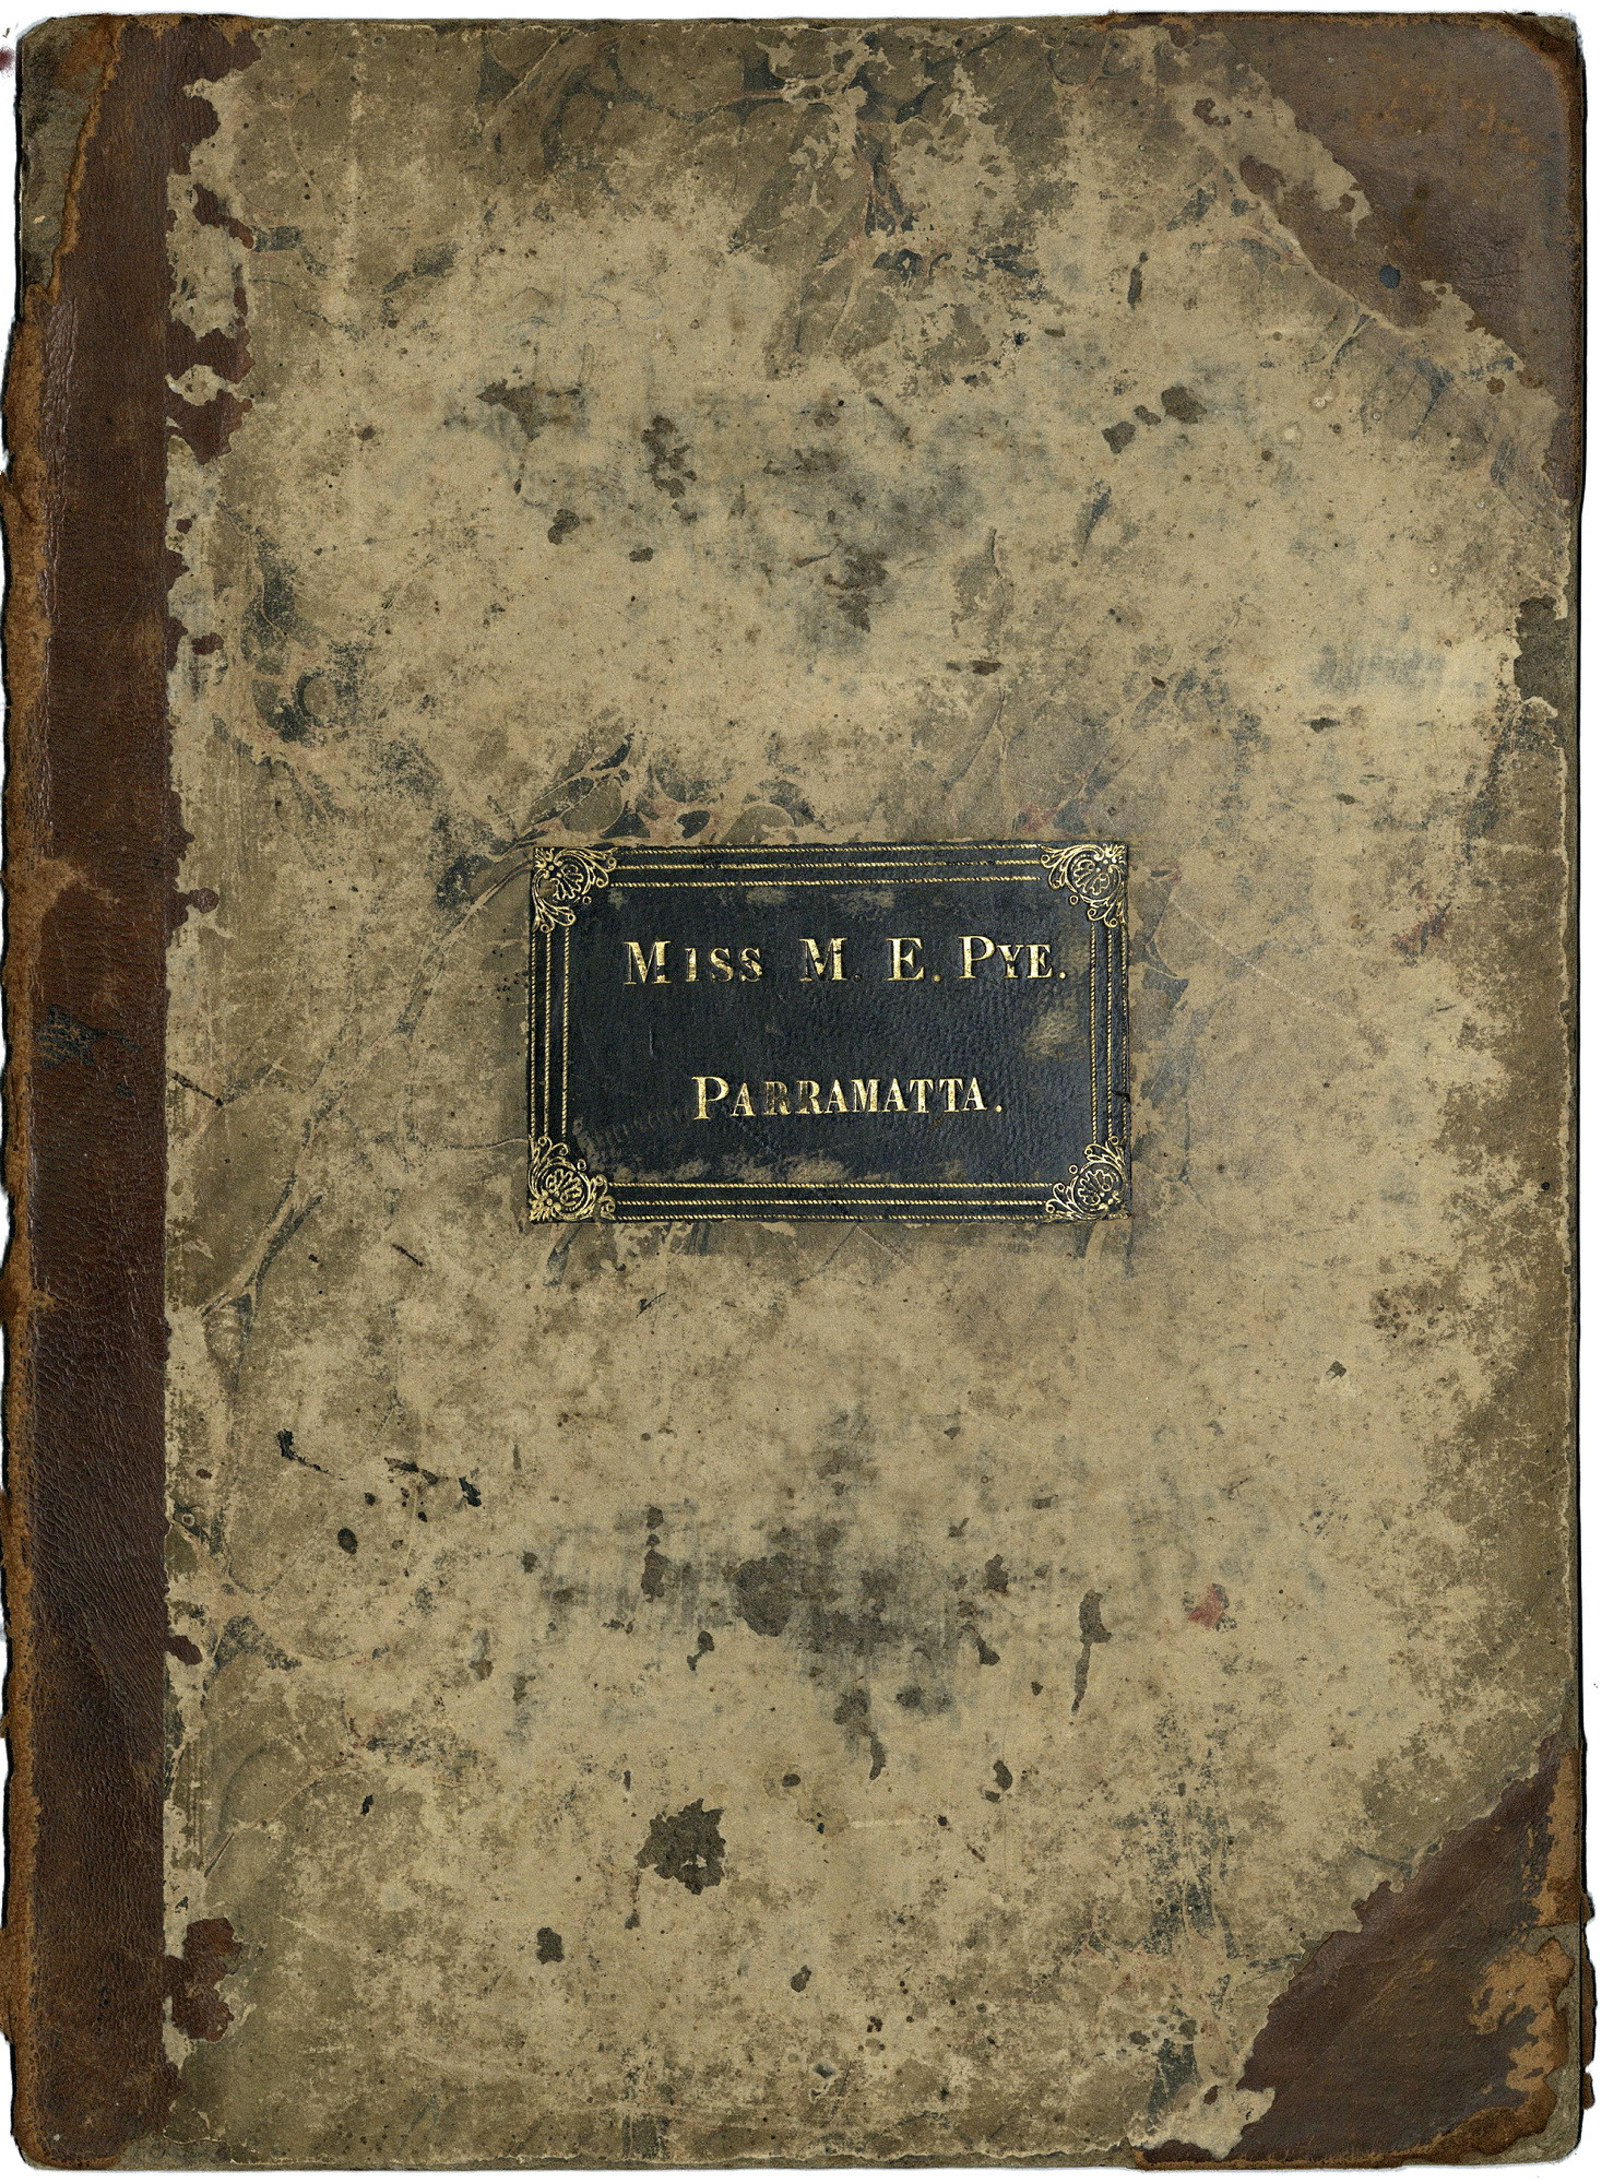 Cover of bound volume of sheet music belonging to Miss M.E. Pye, Parramatta